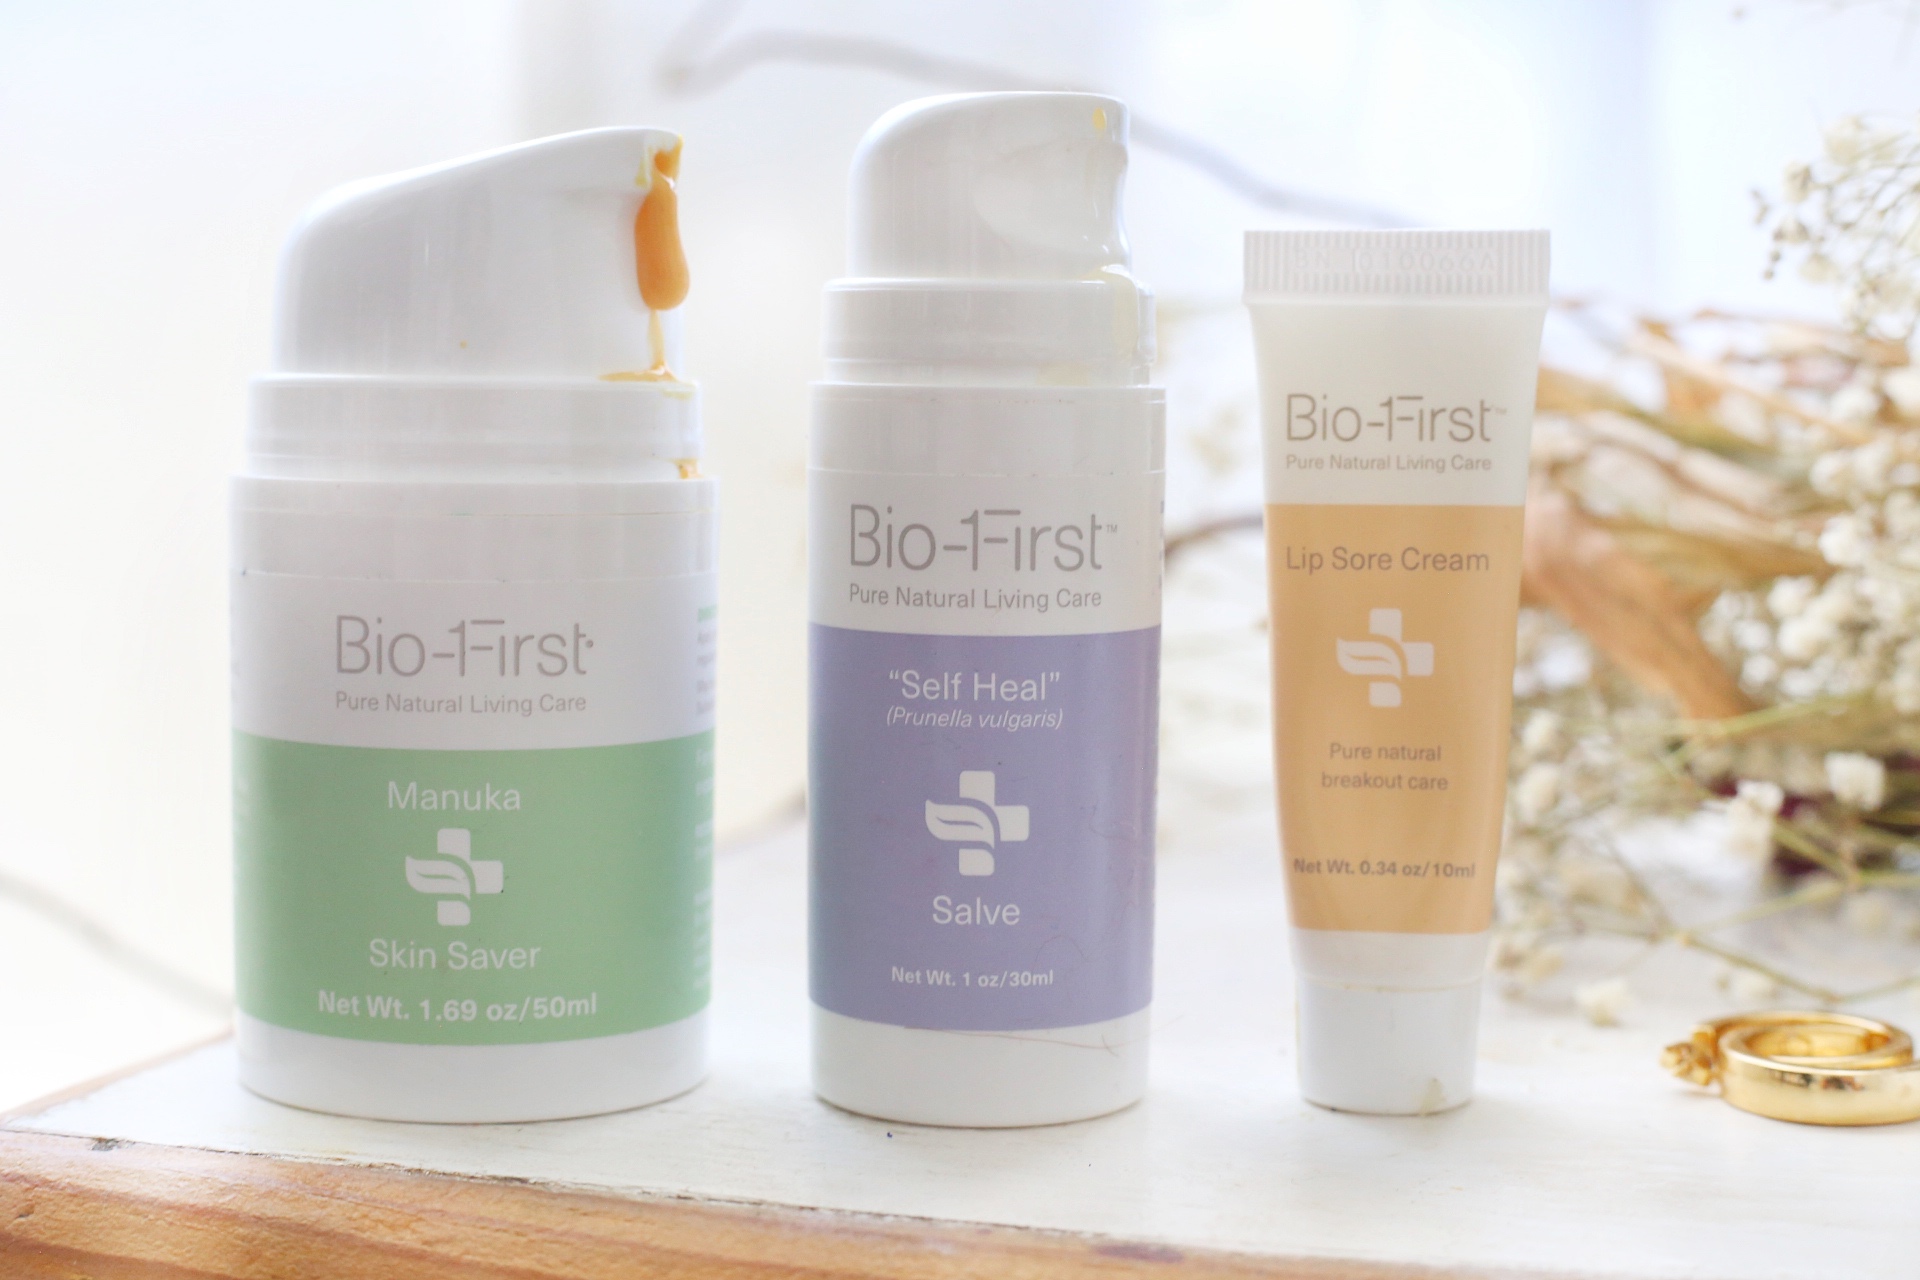 Bio-first manuka skin saver